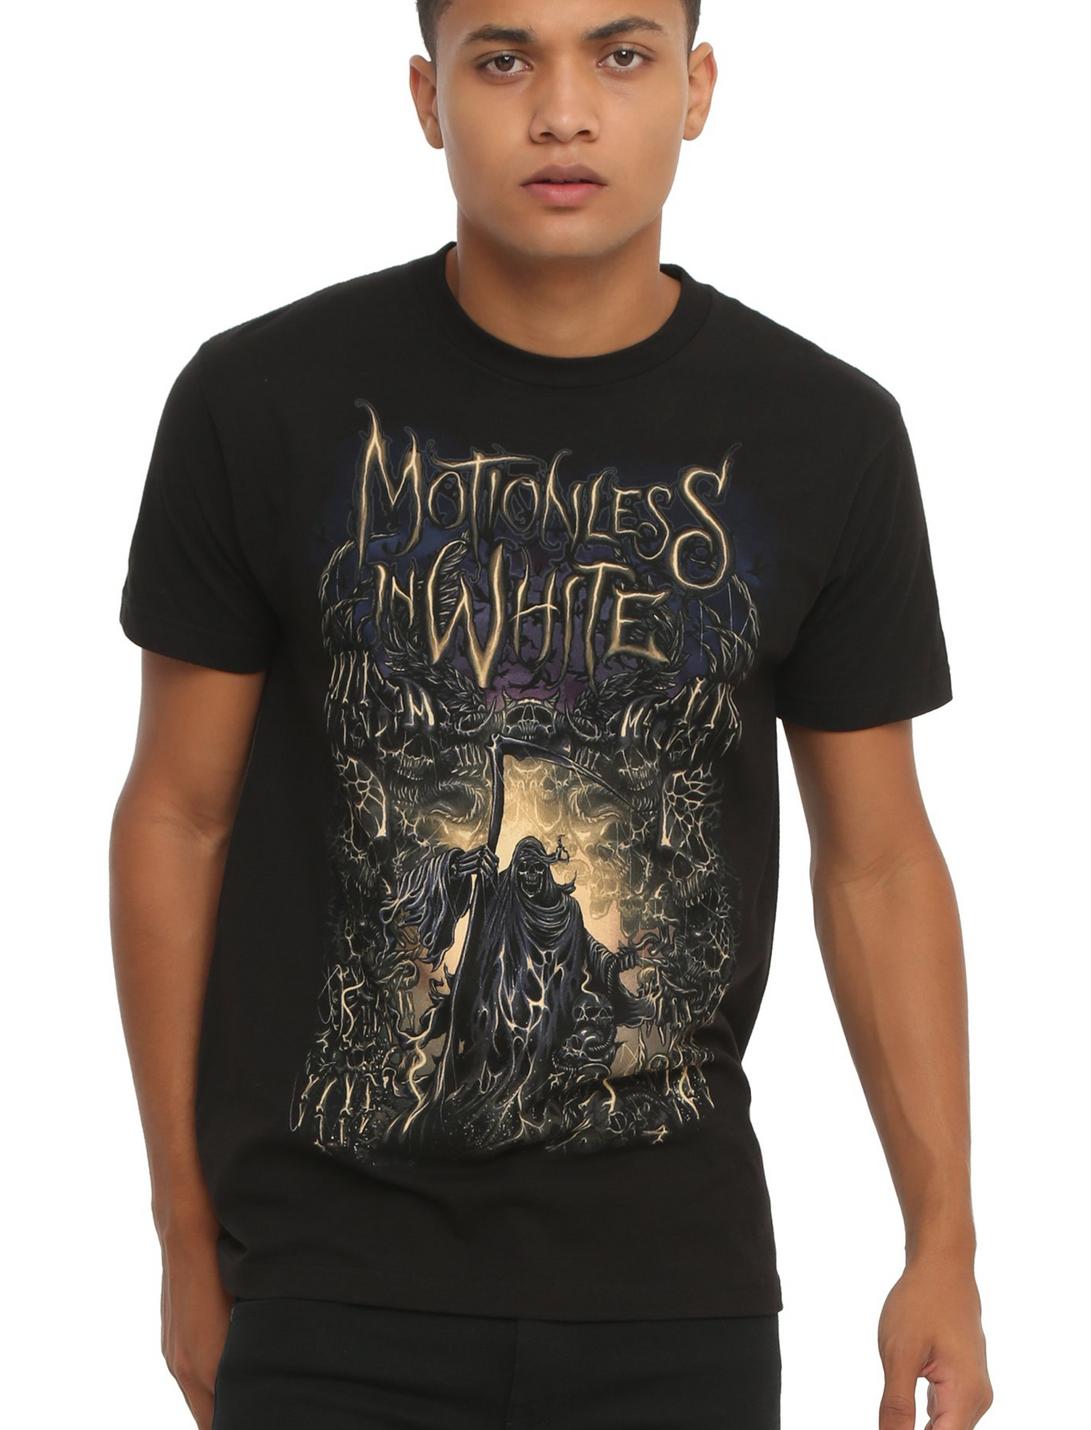 Motionless in White Reaper Image Adult Black T Shirt 